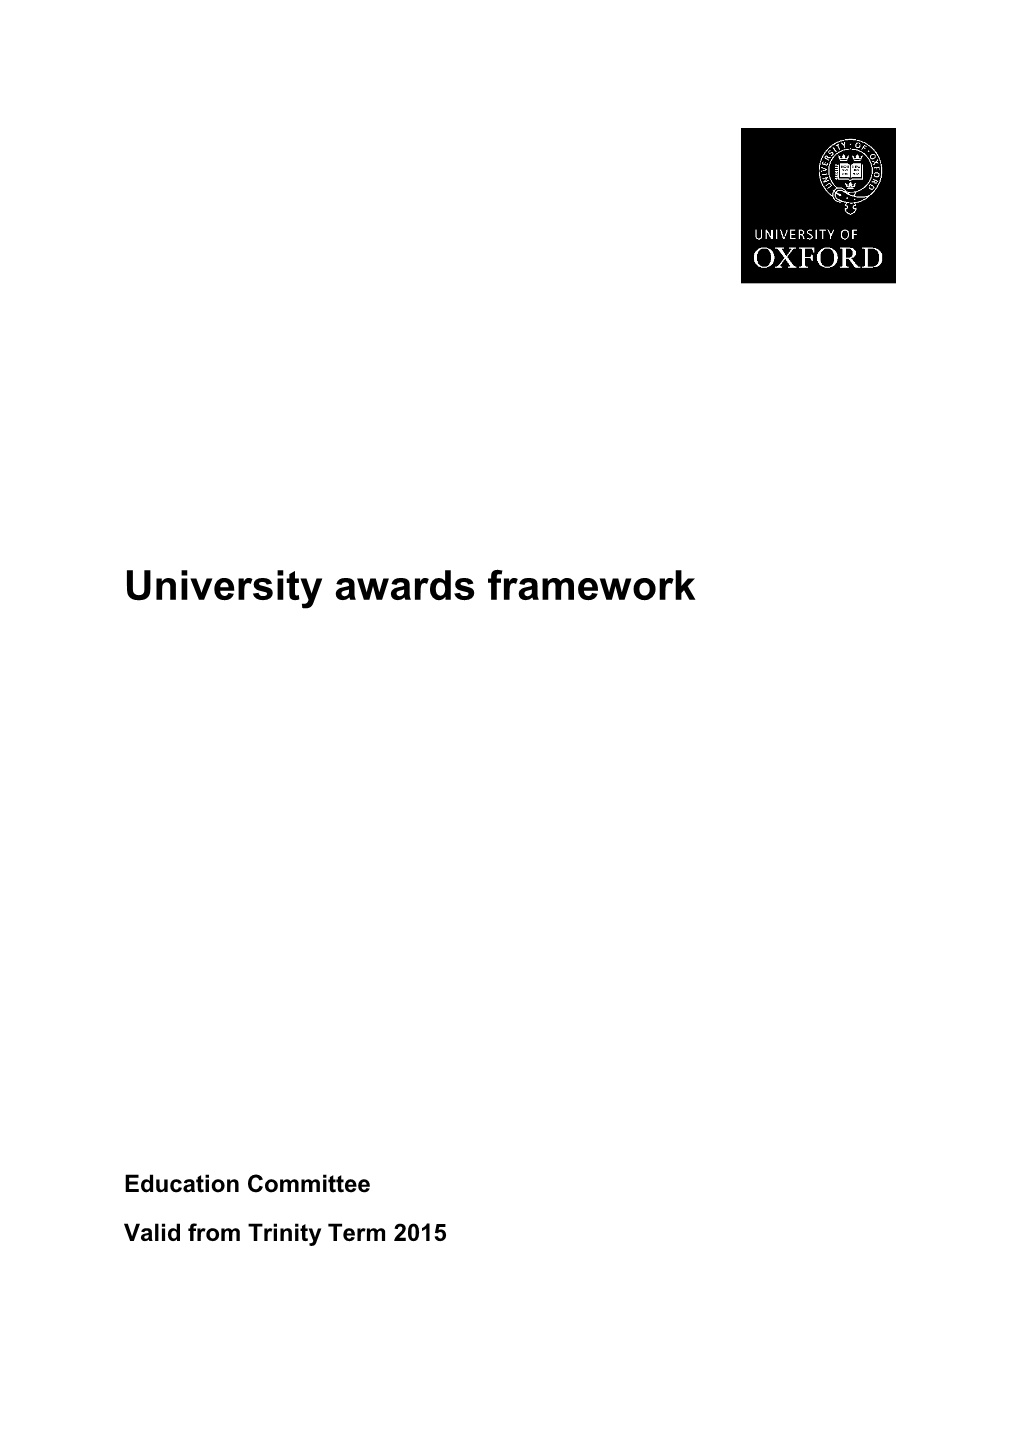 University Awards Framework